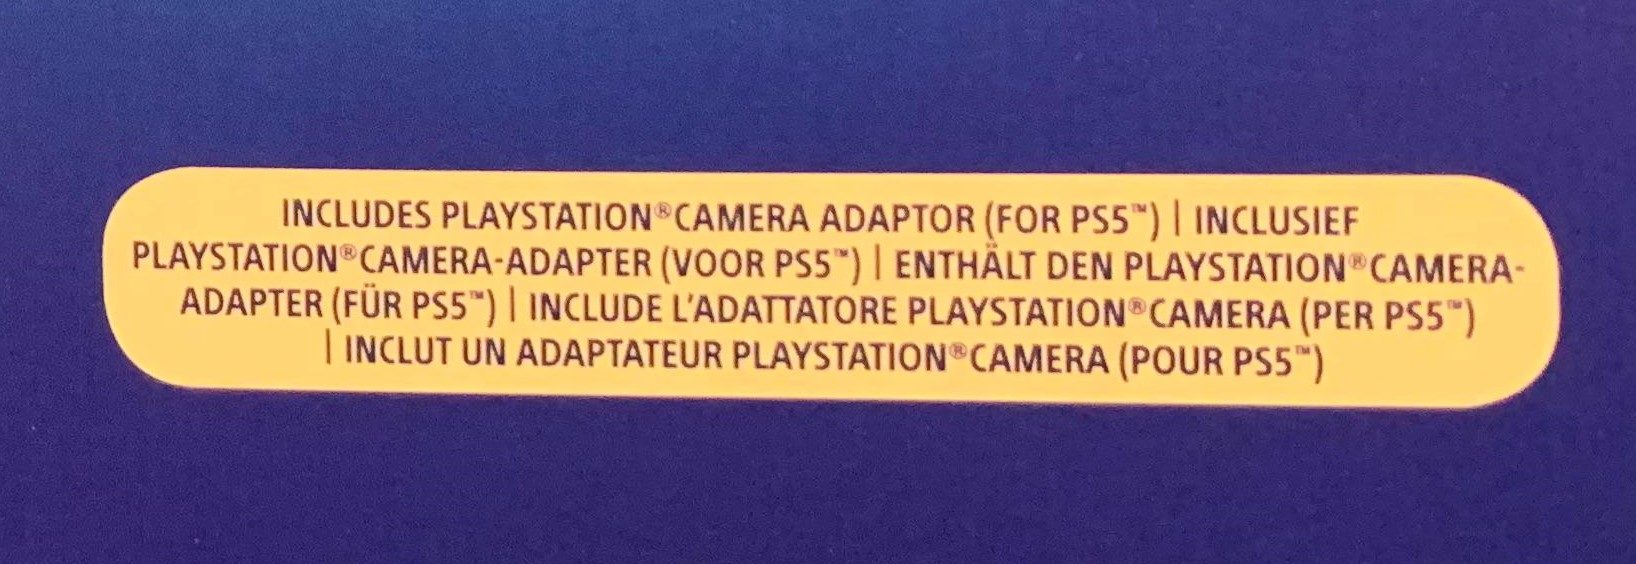 playstation 5 camera adapter